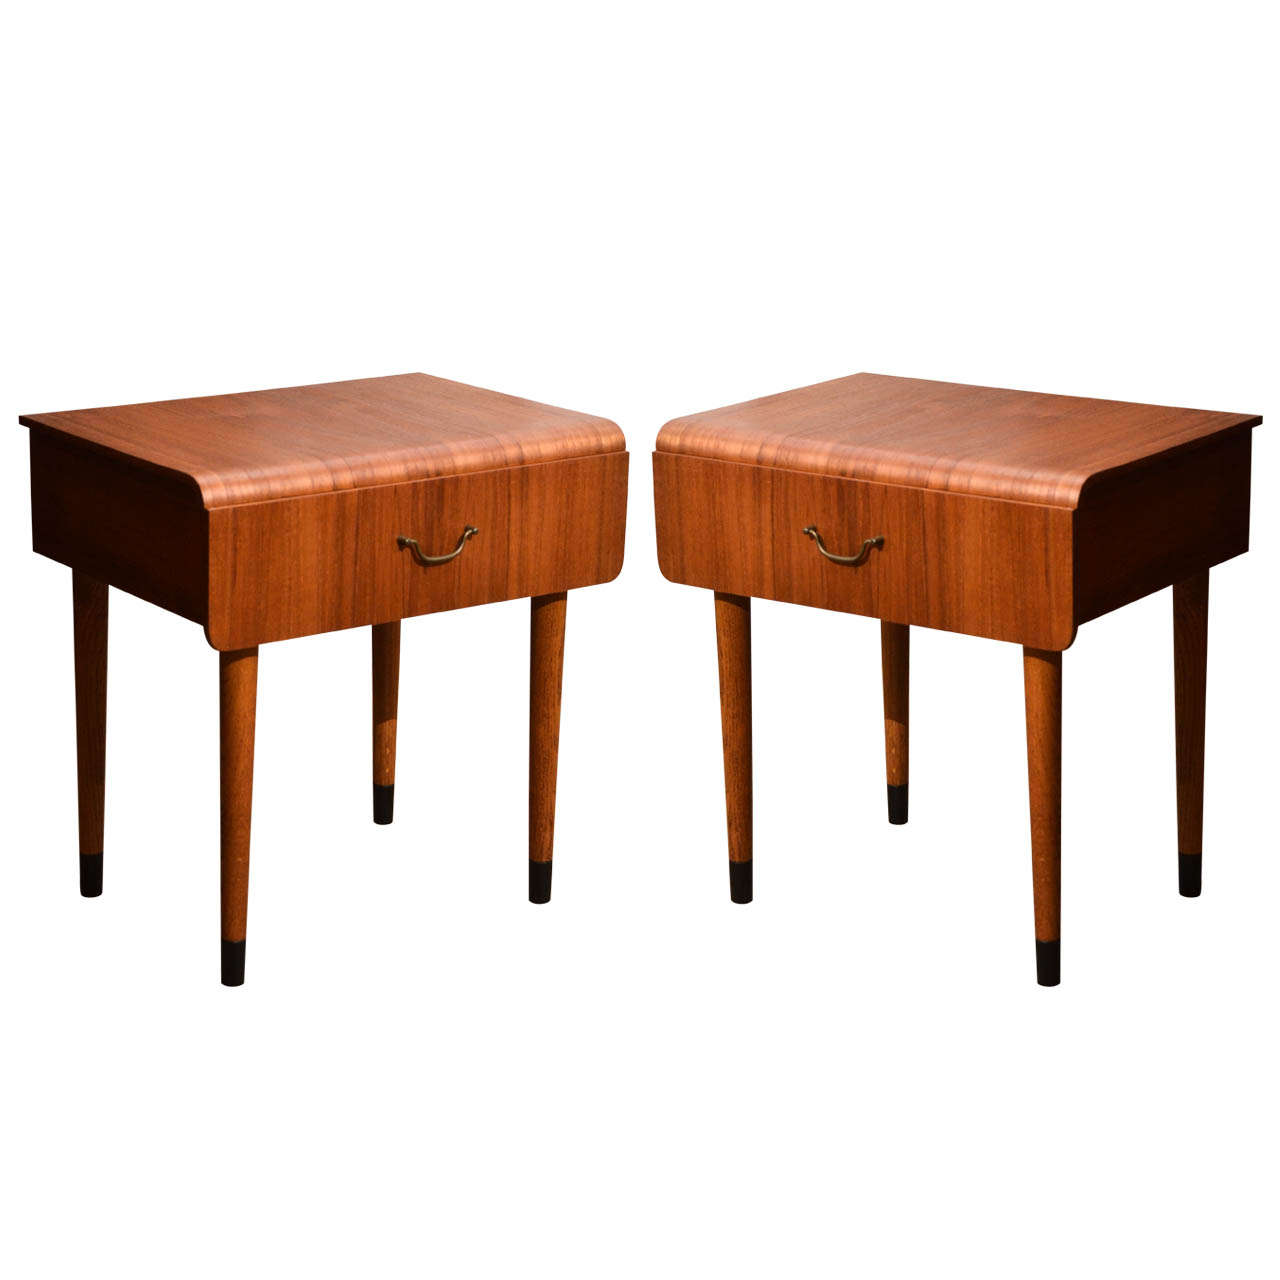 Pair of Midcentury Teak Side Tables in the Style of Severin Hansen Jr.